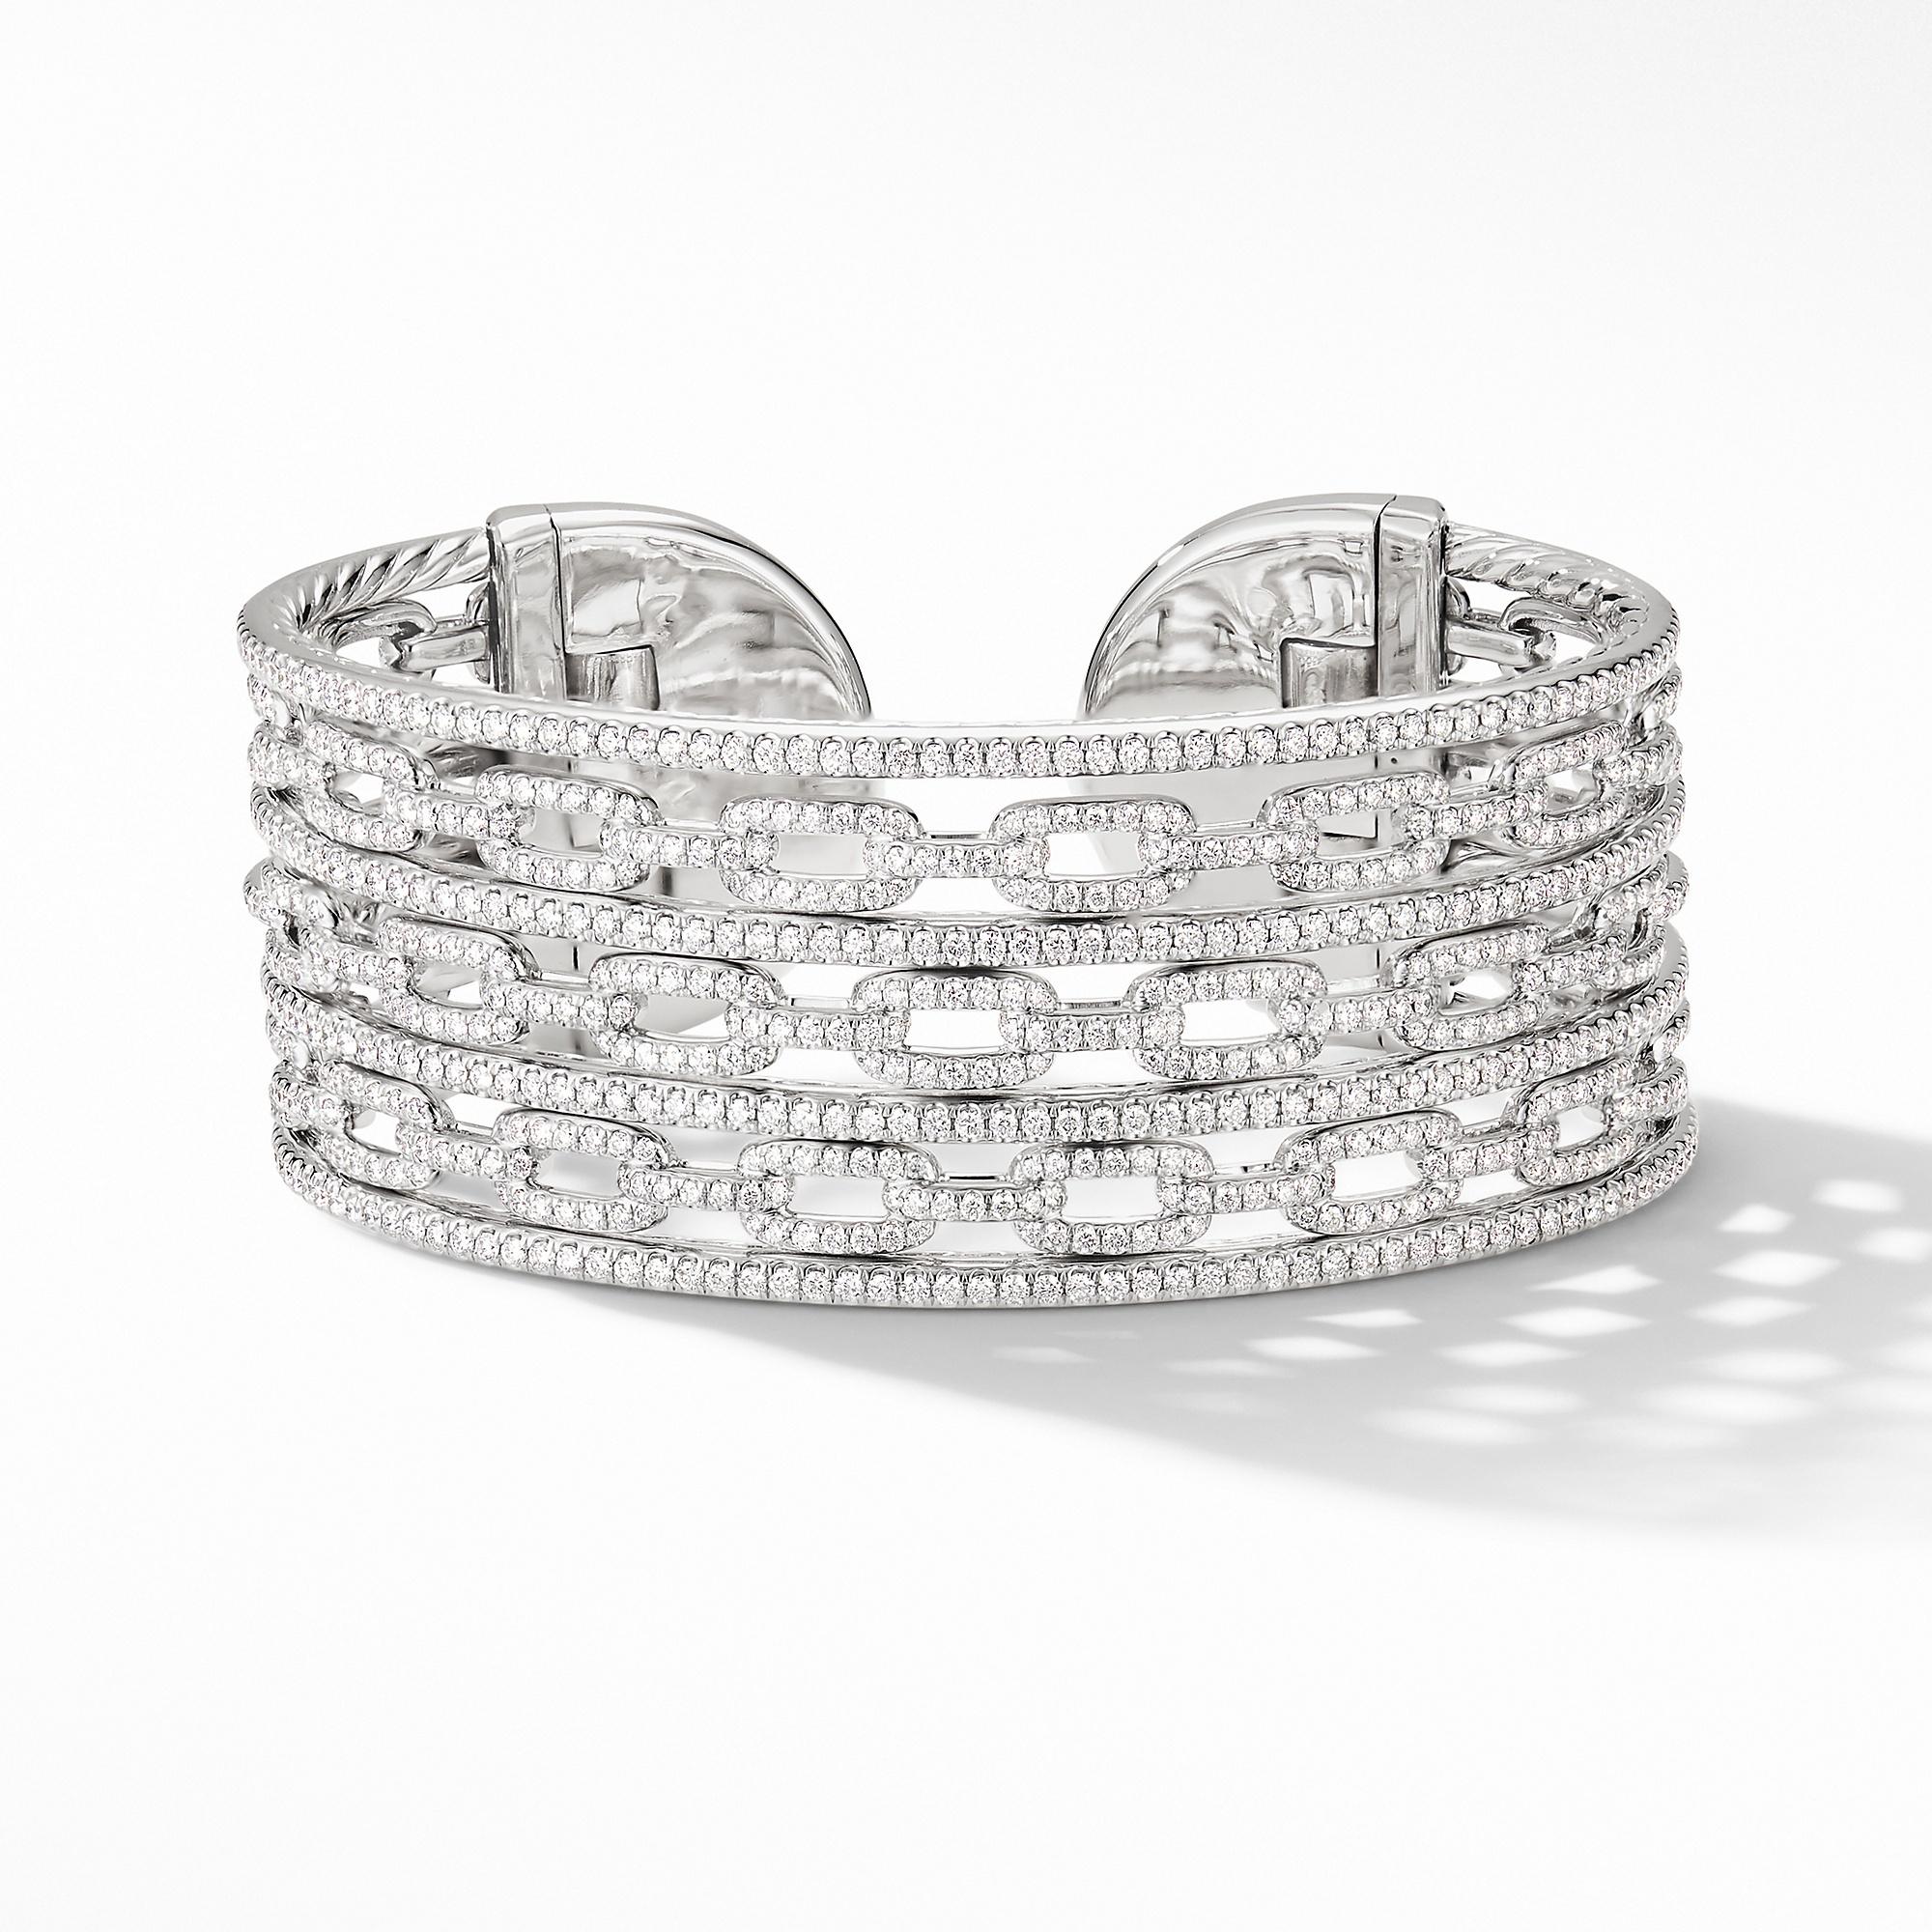 David Yurman Stax Cuff Bracelet in 18k White Gold with Pave Diamonds